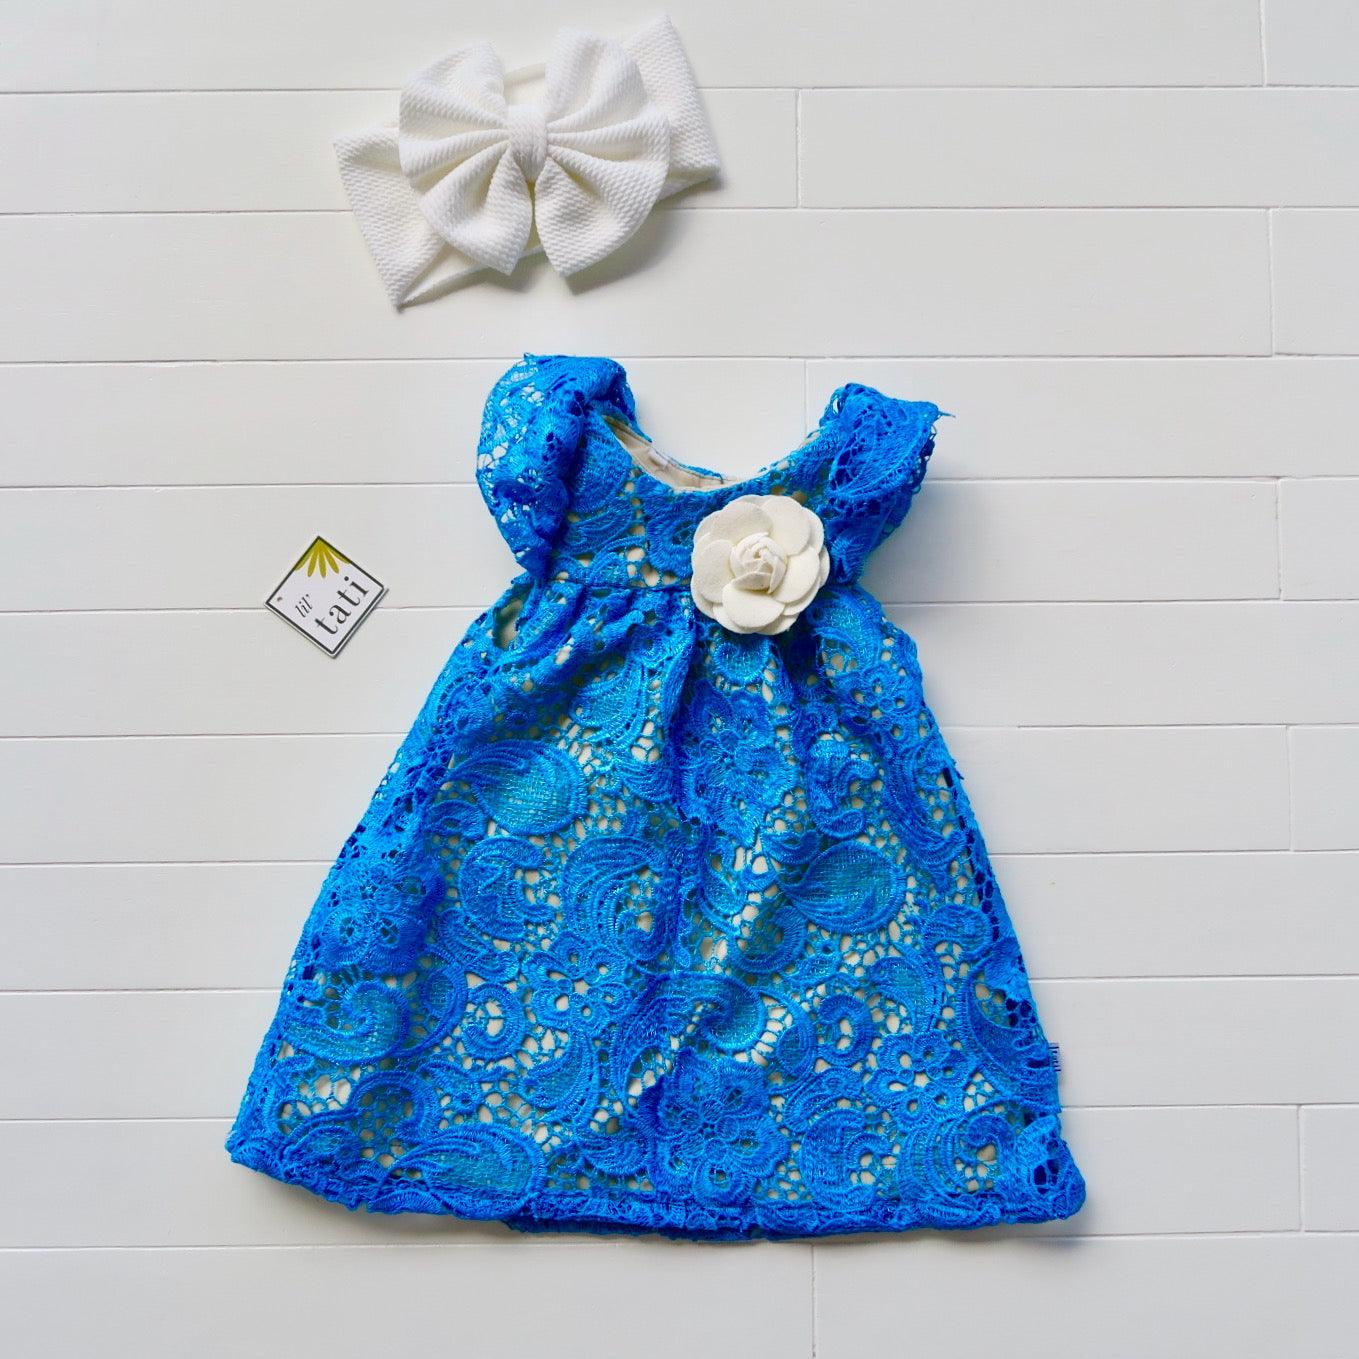 Magnolia Dress in Bright Blue Paisley Lace - Lil' Tati